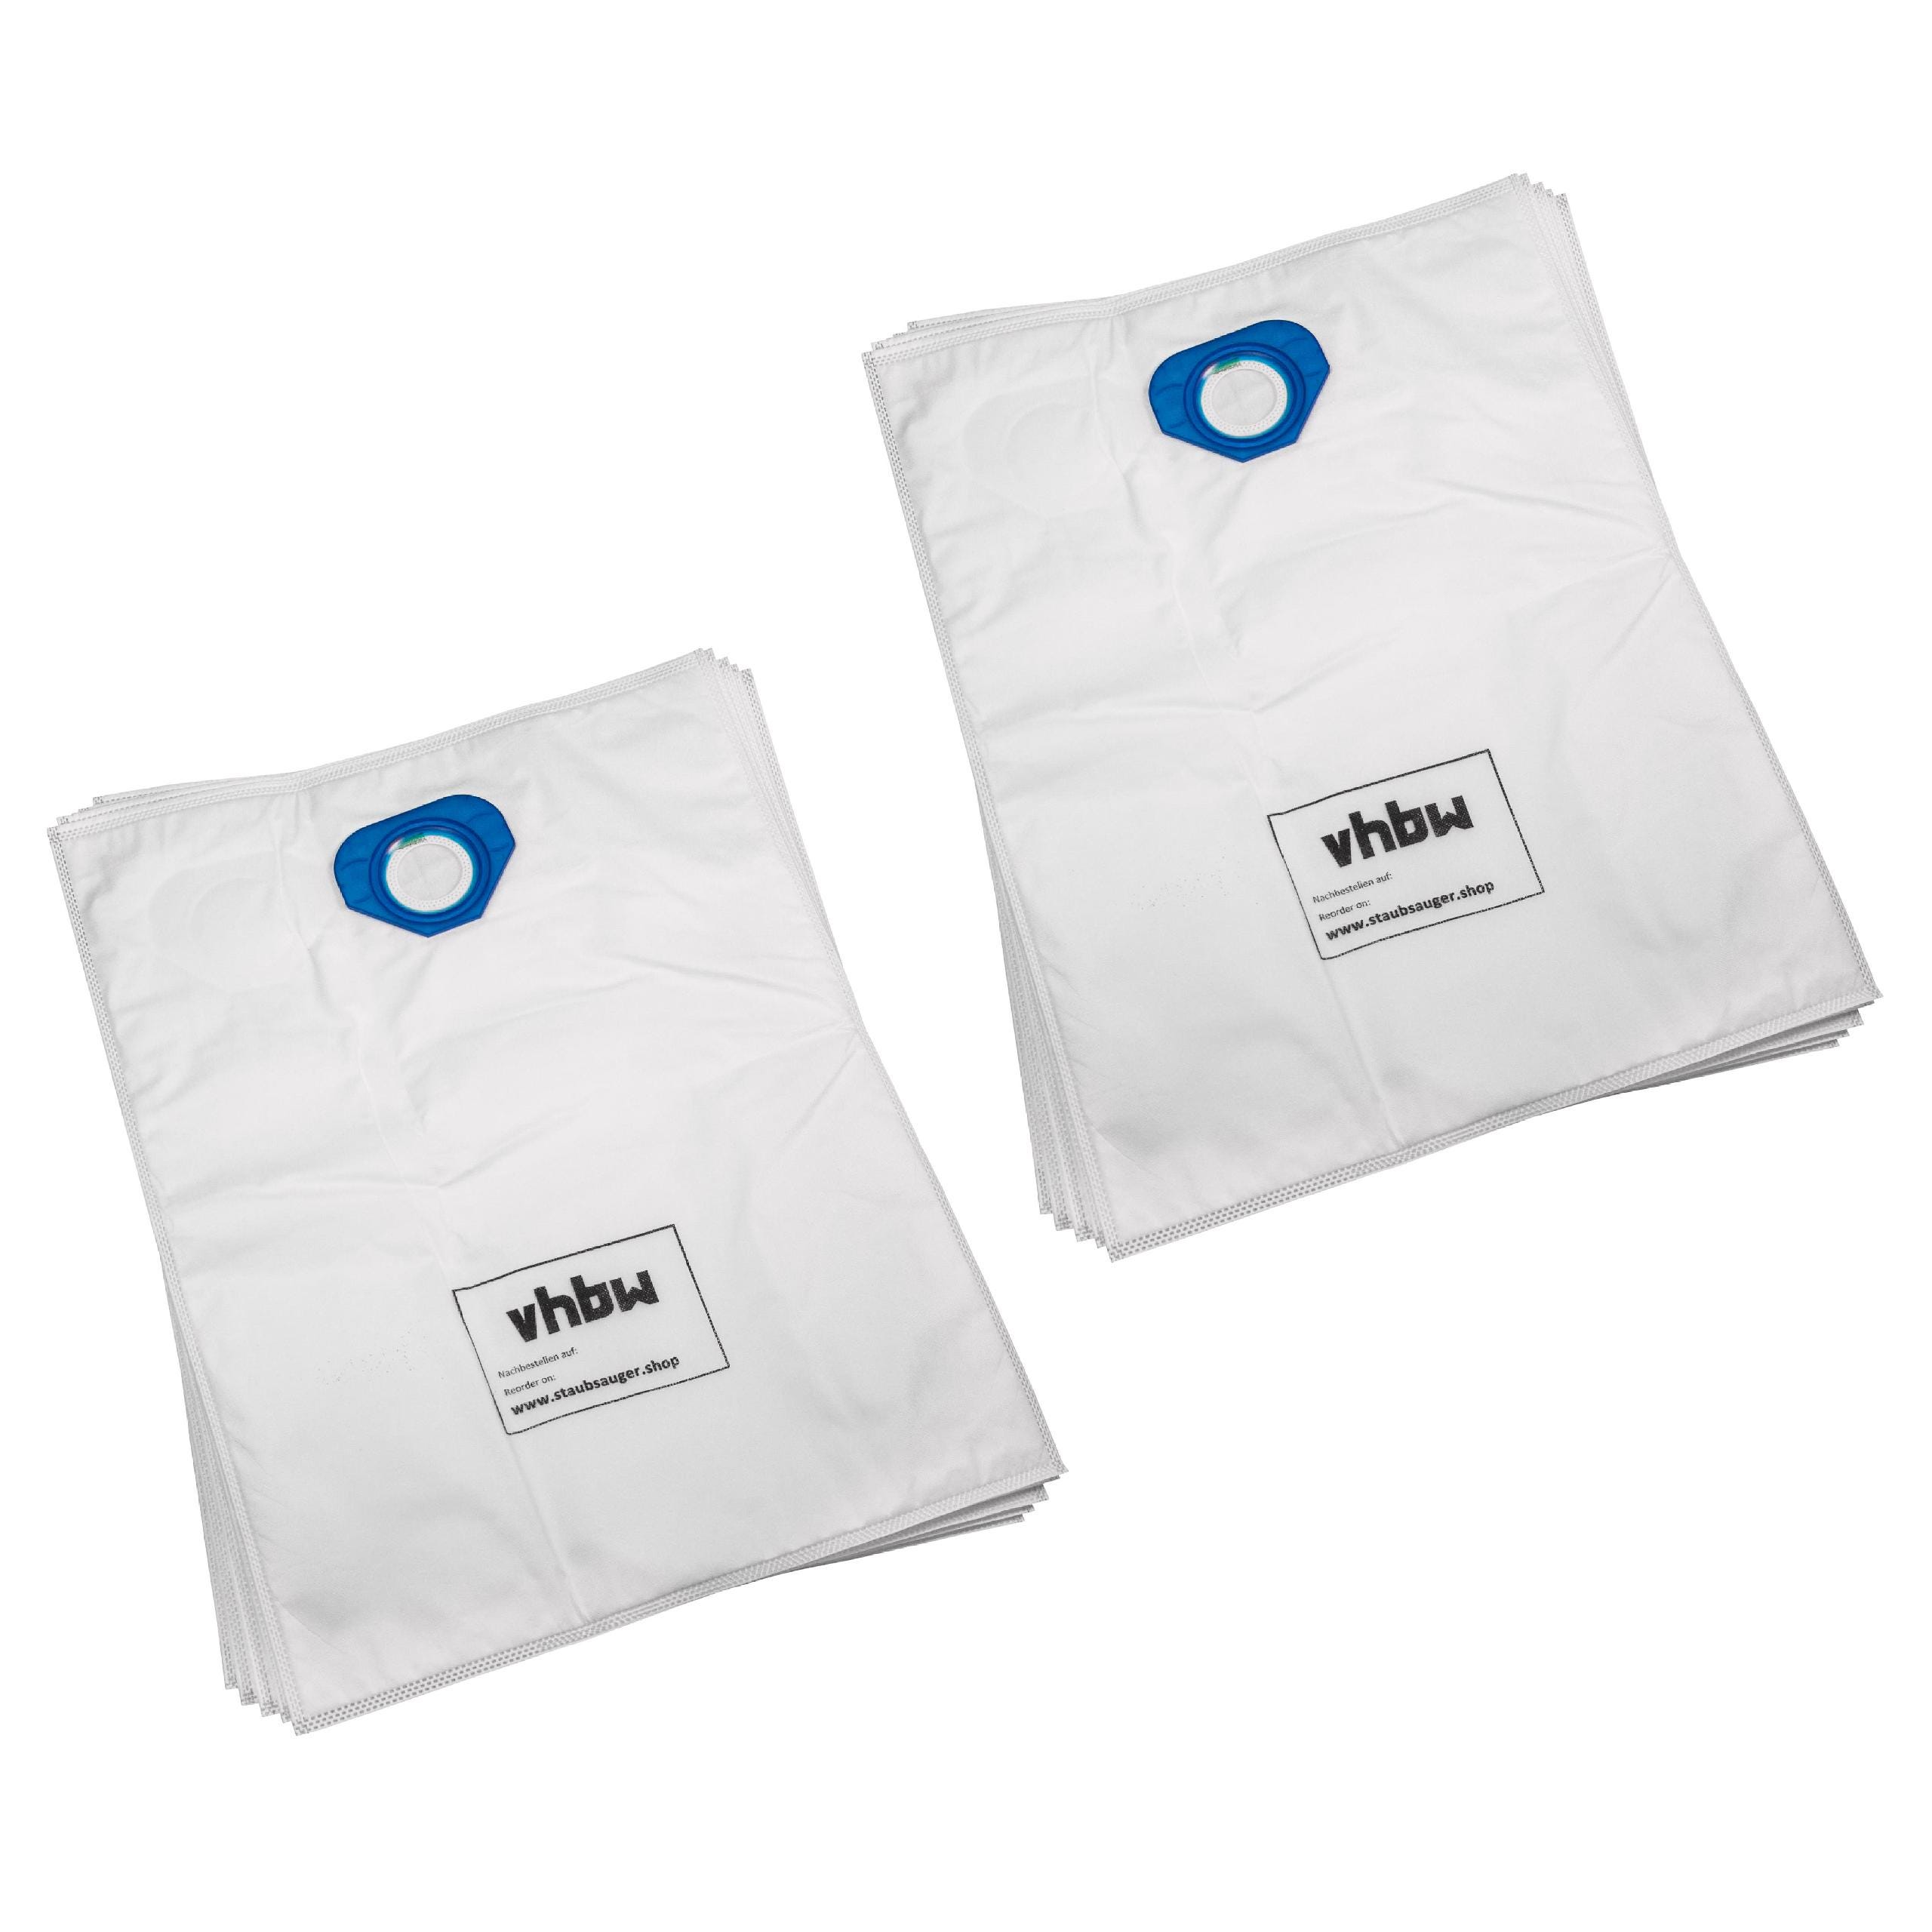 vhbw 10x sacs d'aspirateur, sac en microfibre pour aspirateur